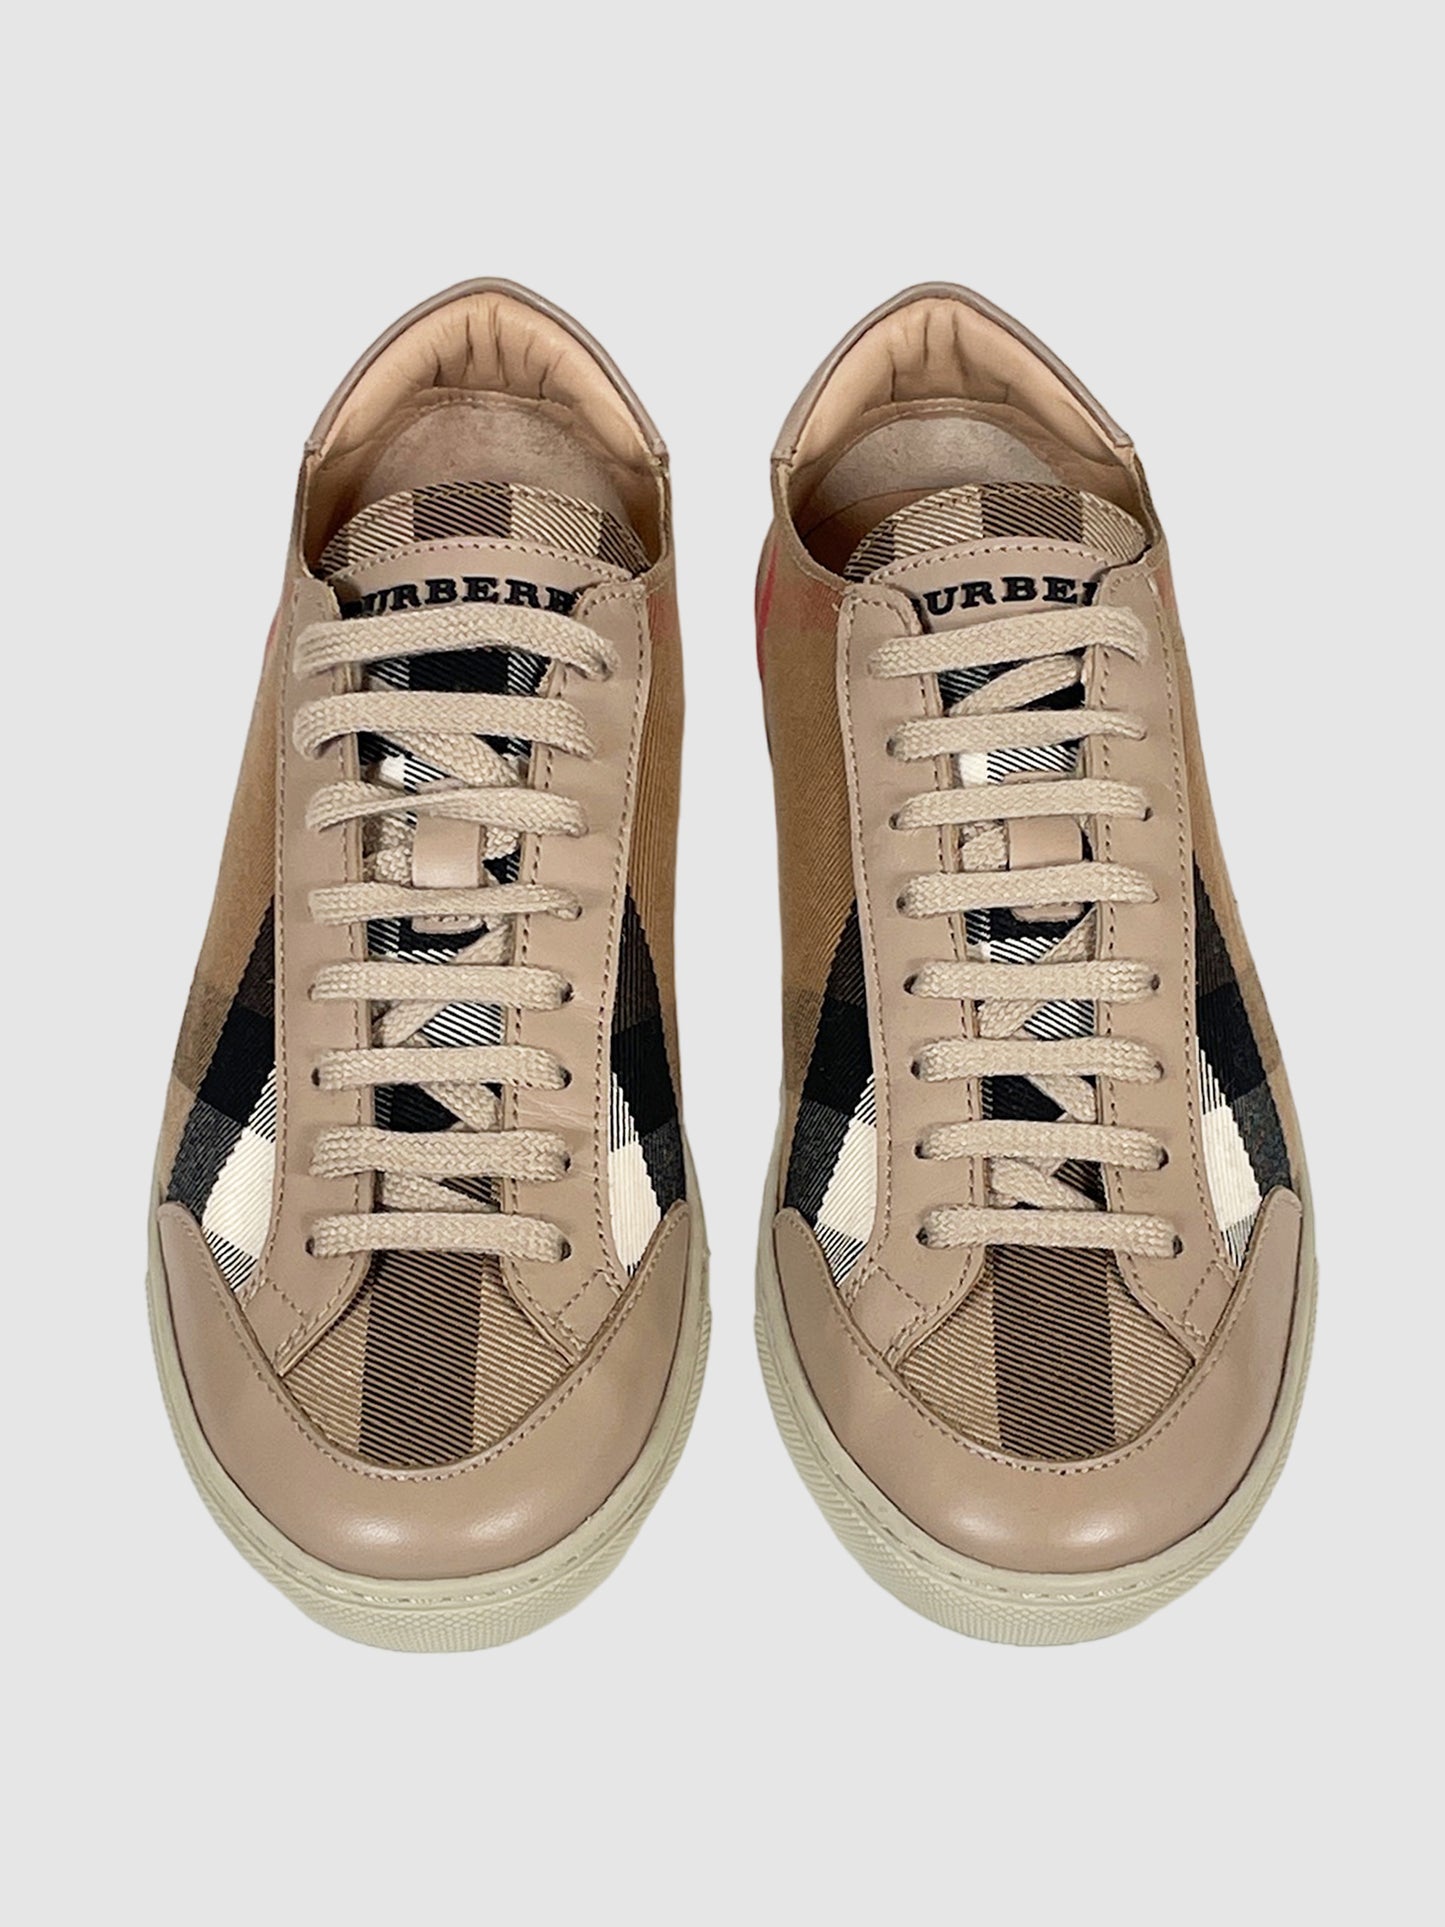 Leather Nova Check Sneakers - Size 36